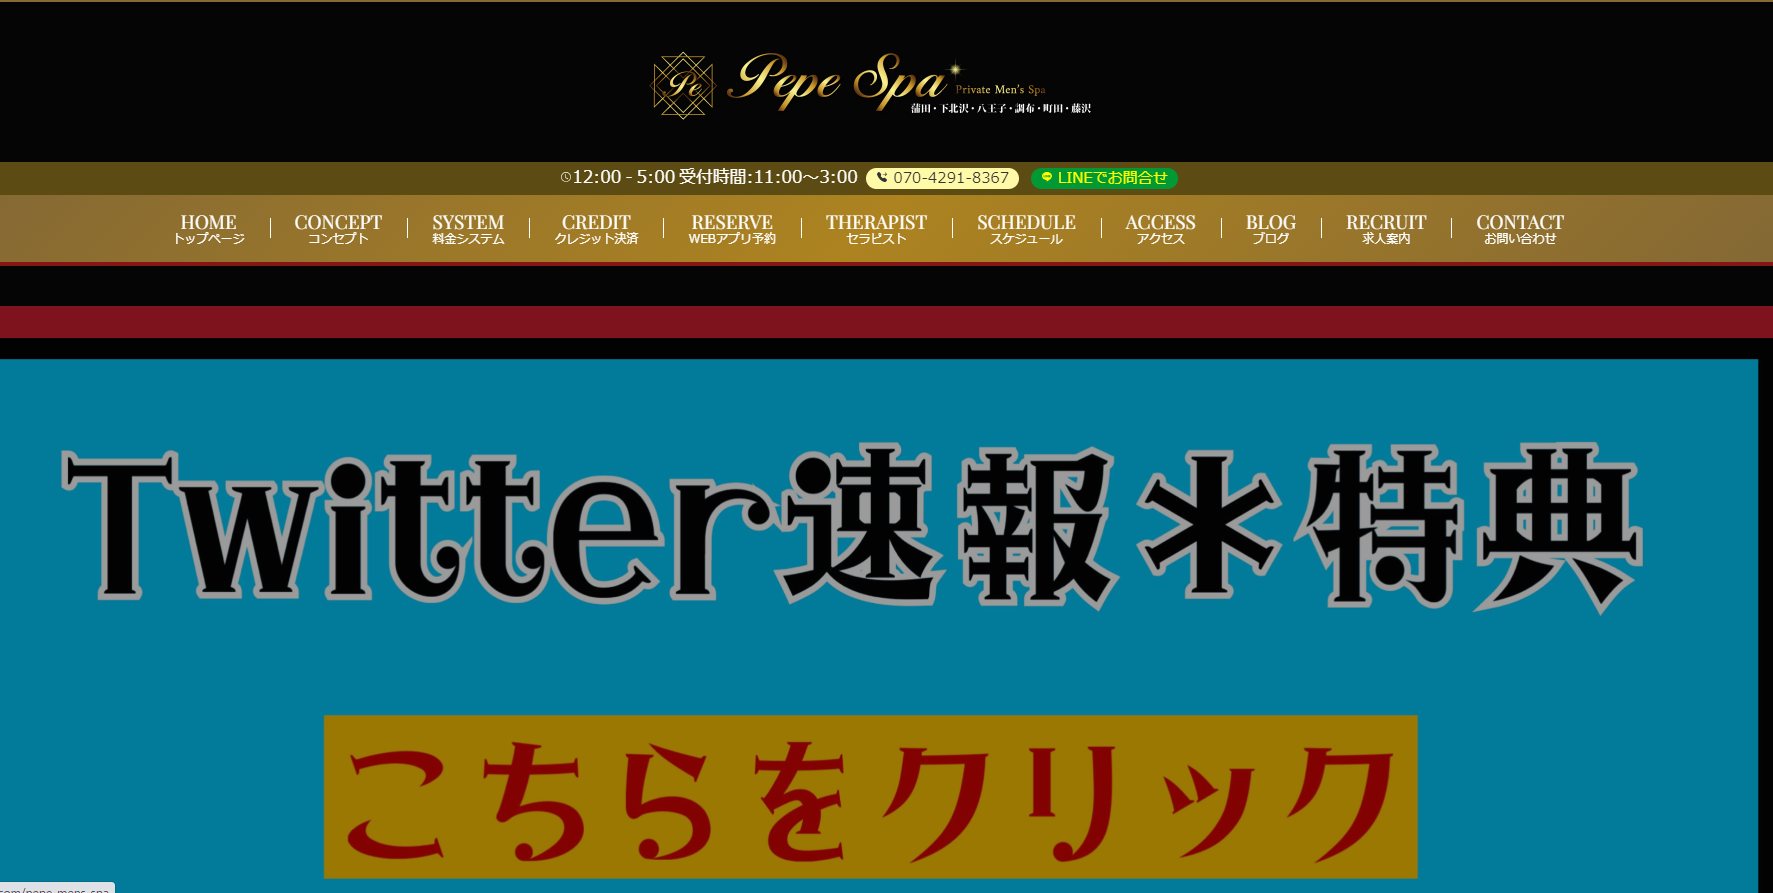 PePe Spa 川崎店 オフィシャルサイト